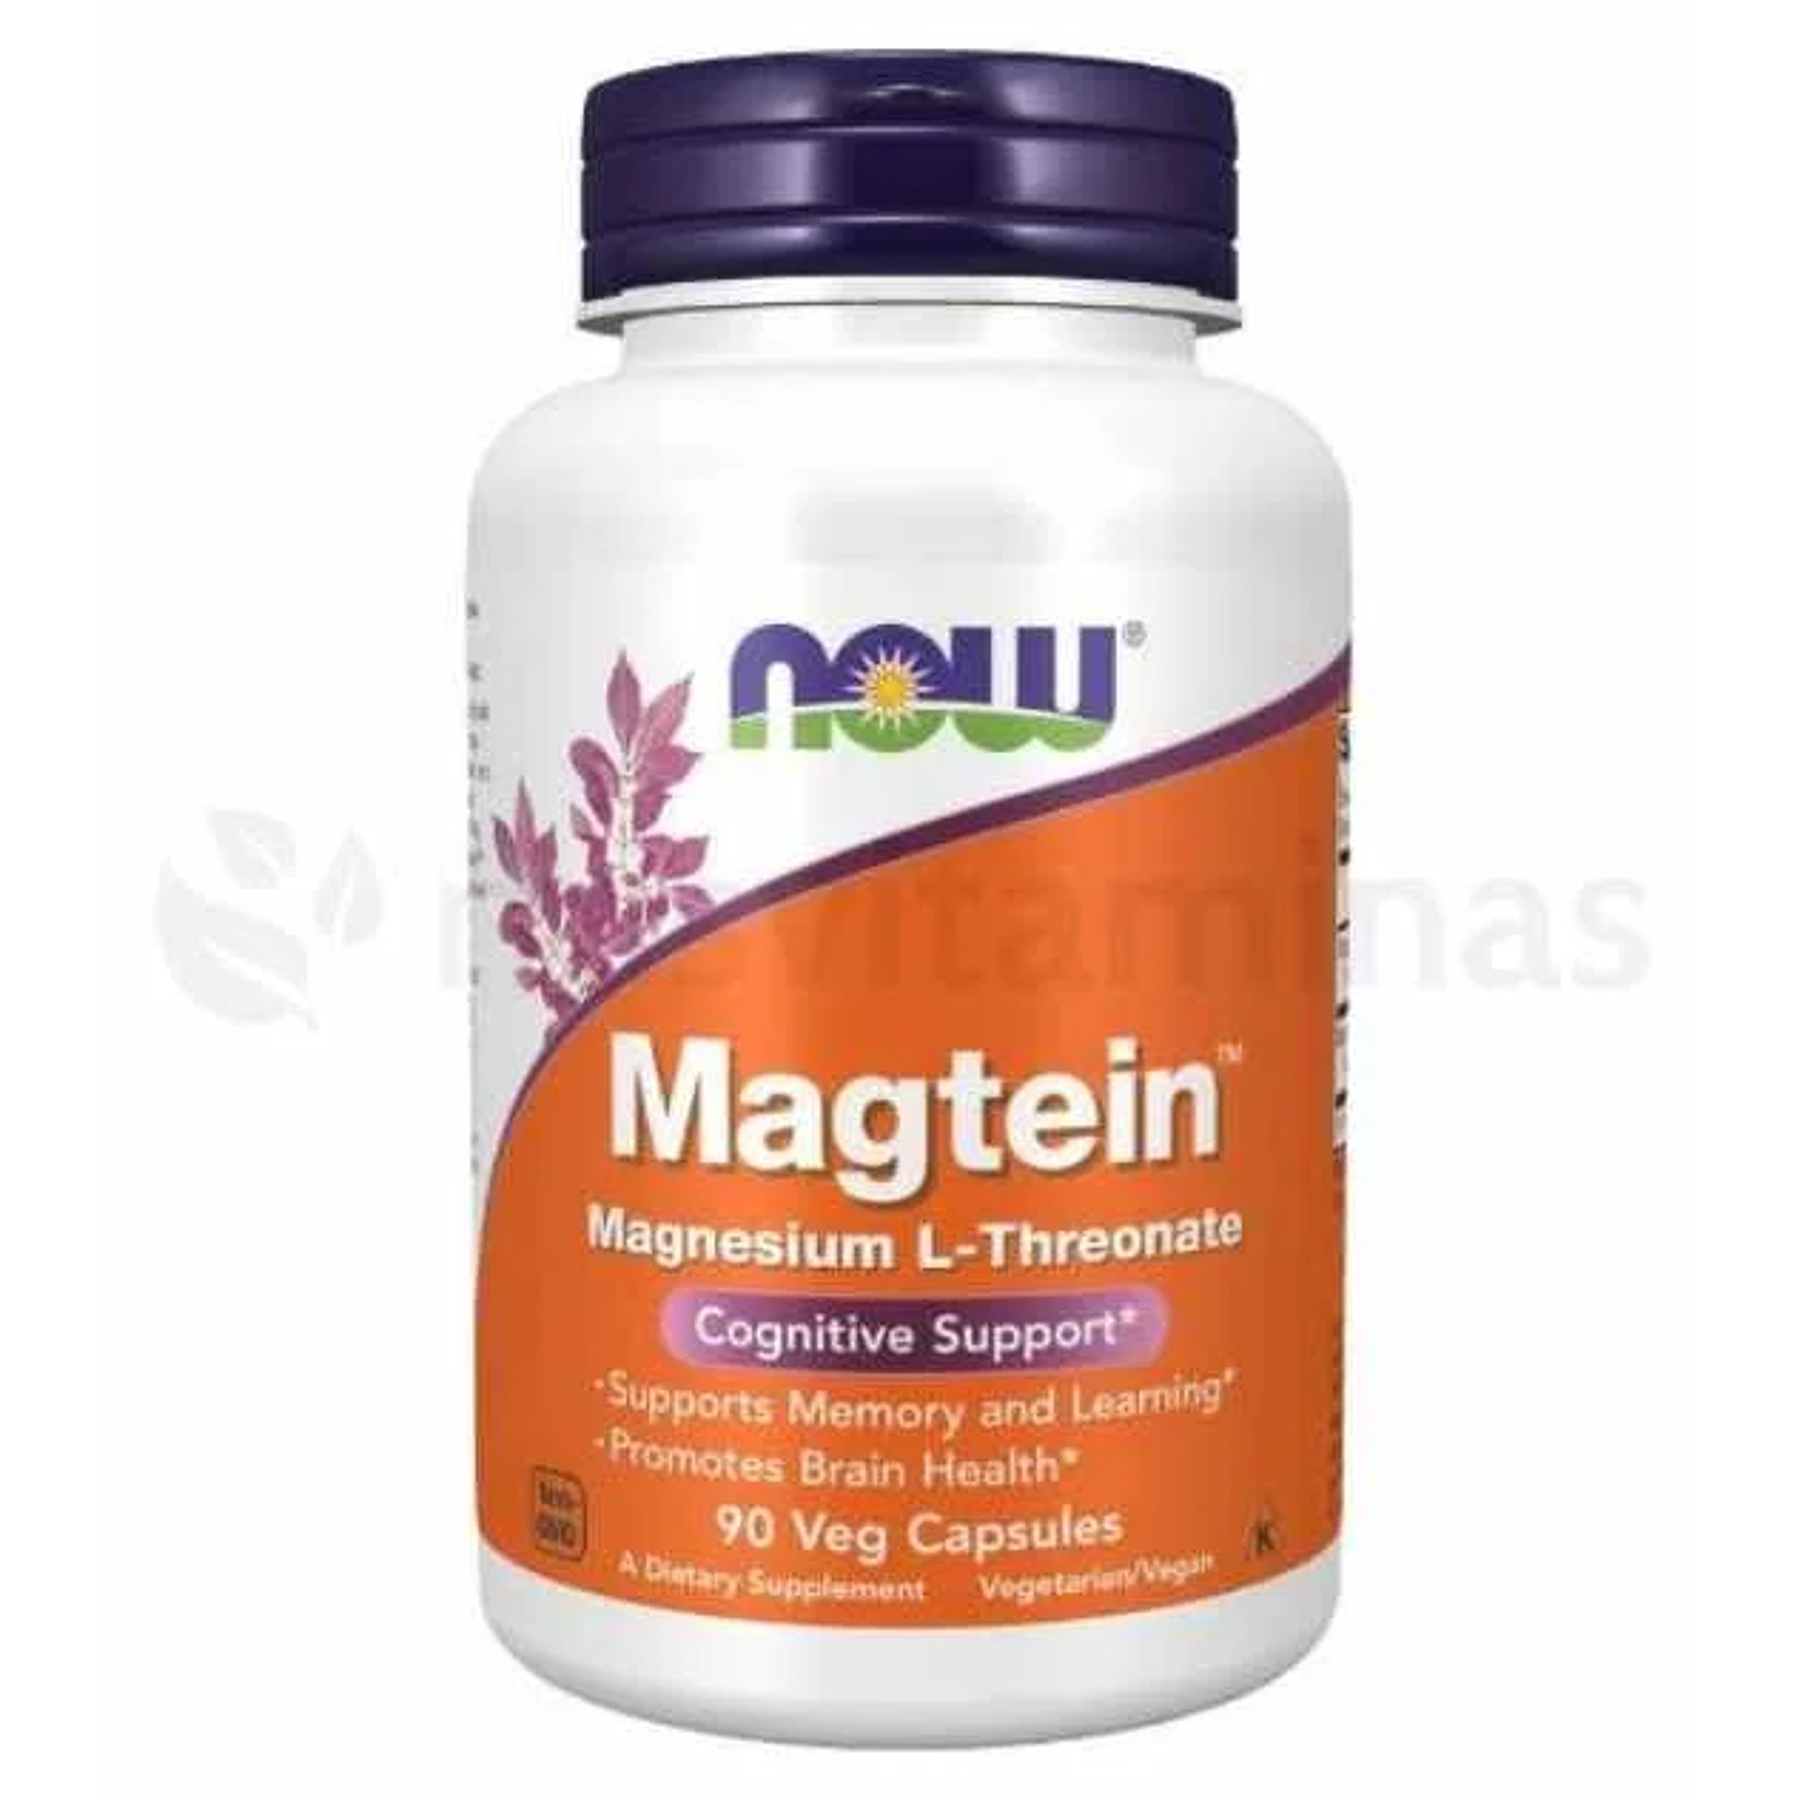 Magtein Magnesium L-Threonate Now 